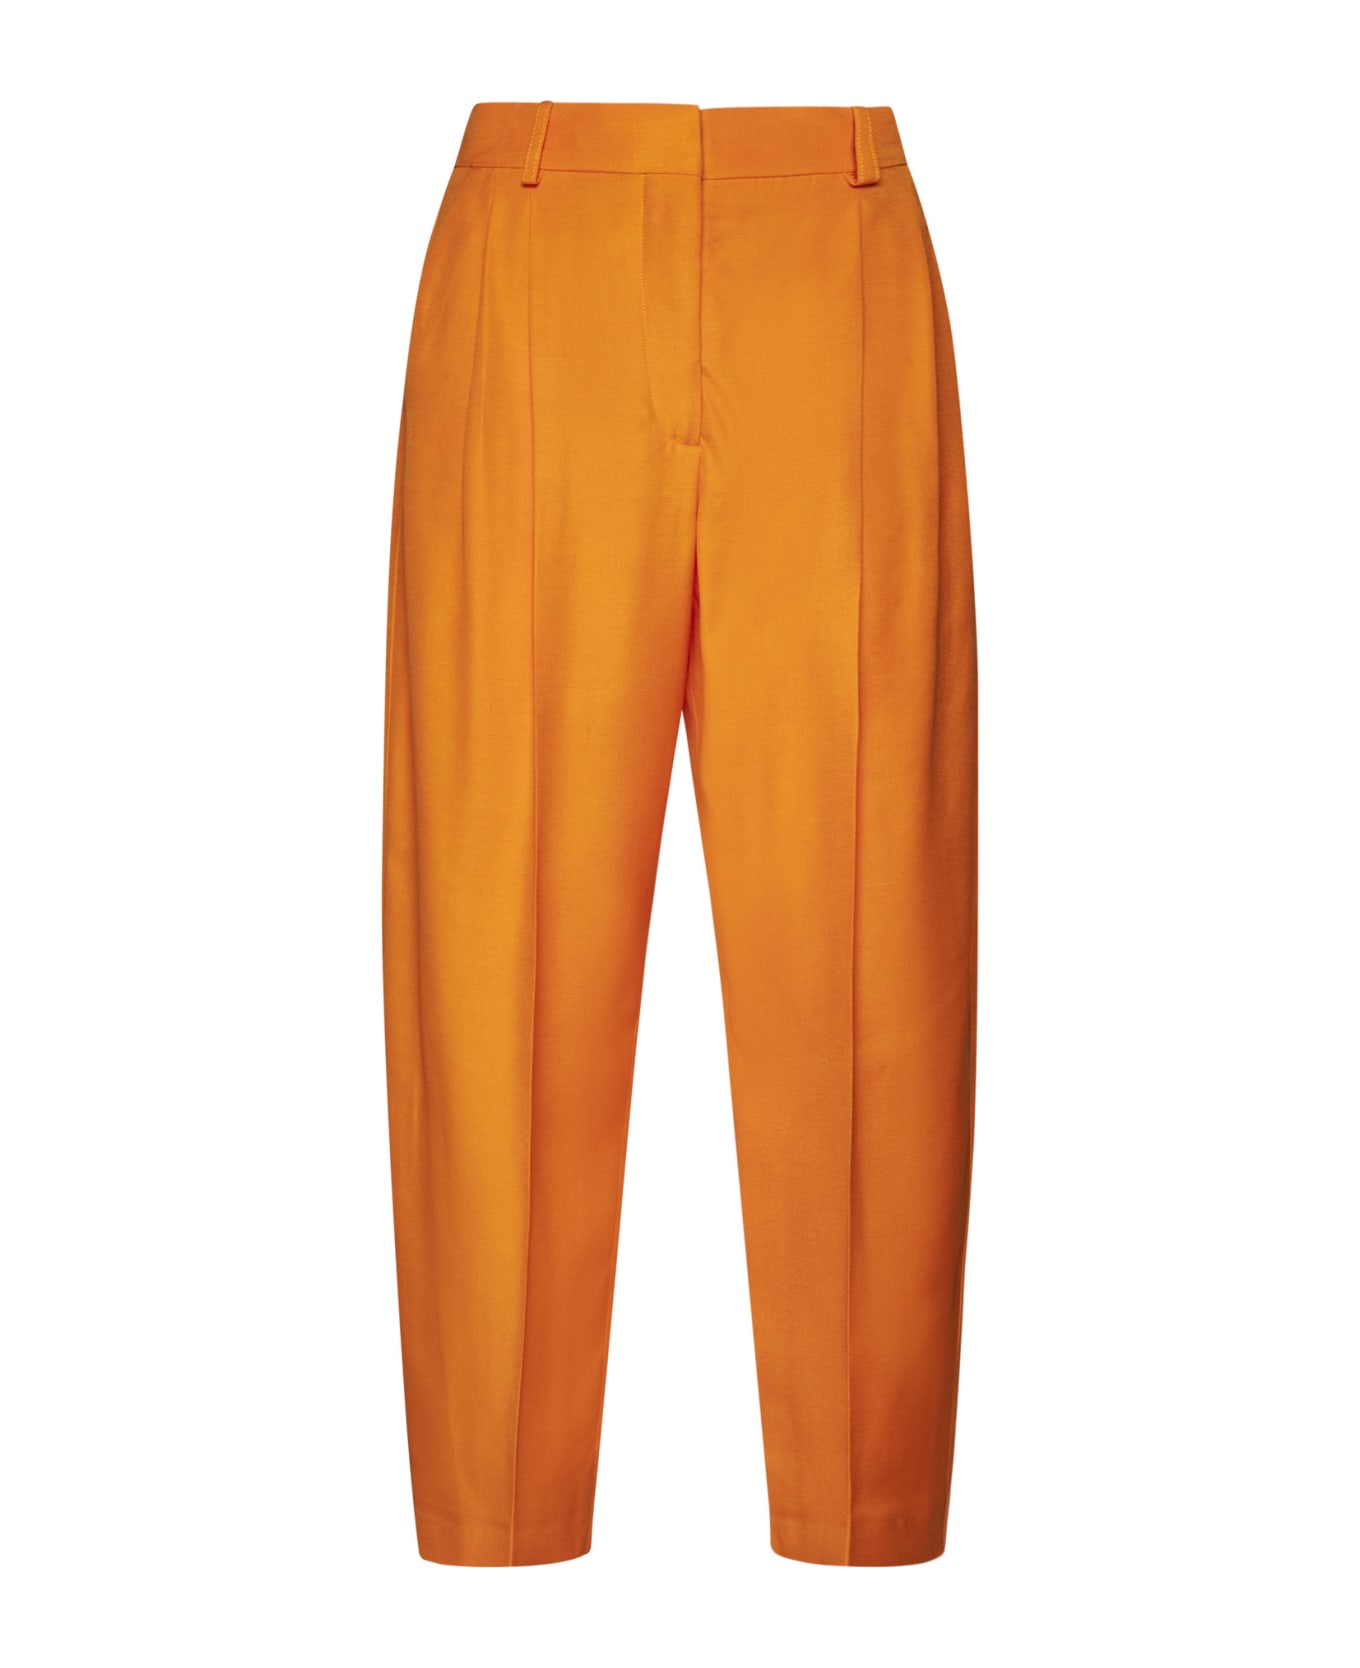 Stella McCartney Pants - Bright orange